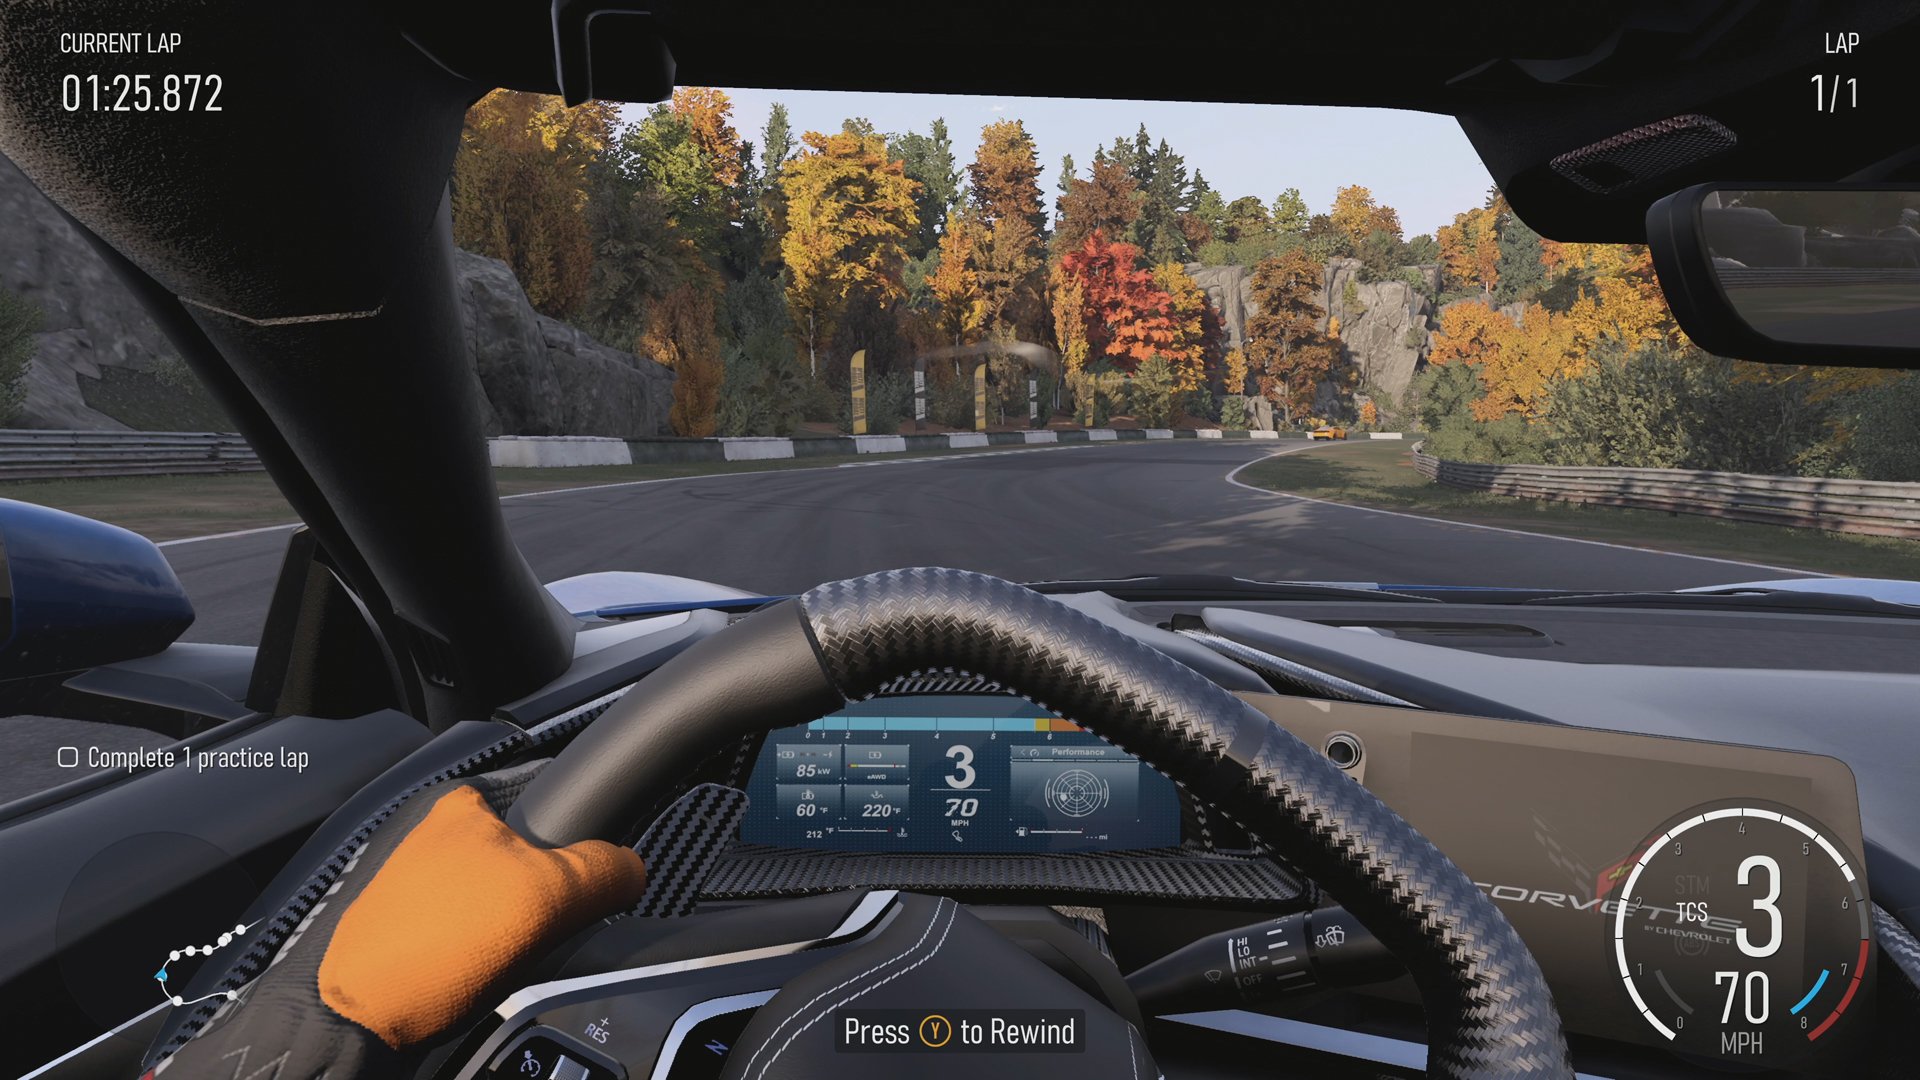 Forza Horizon 4 Features Preview 